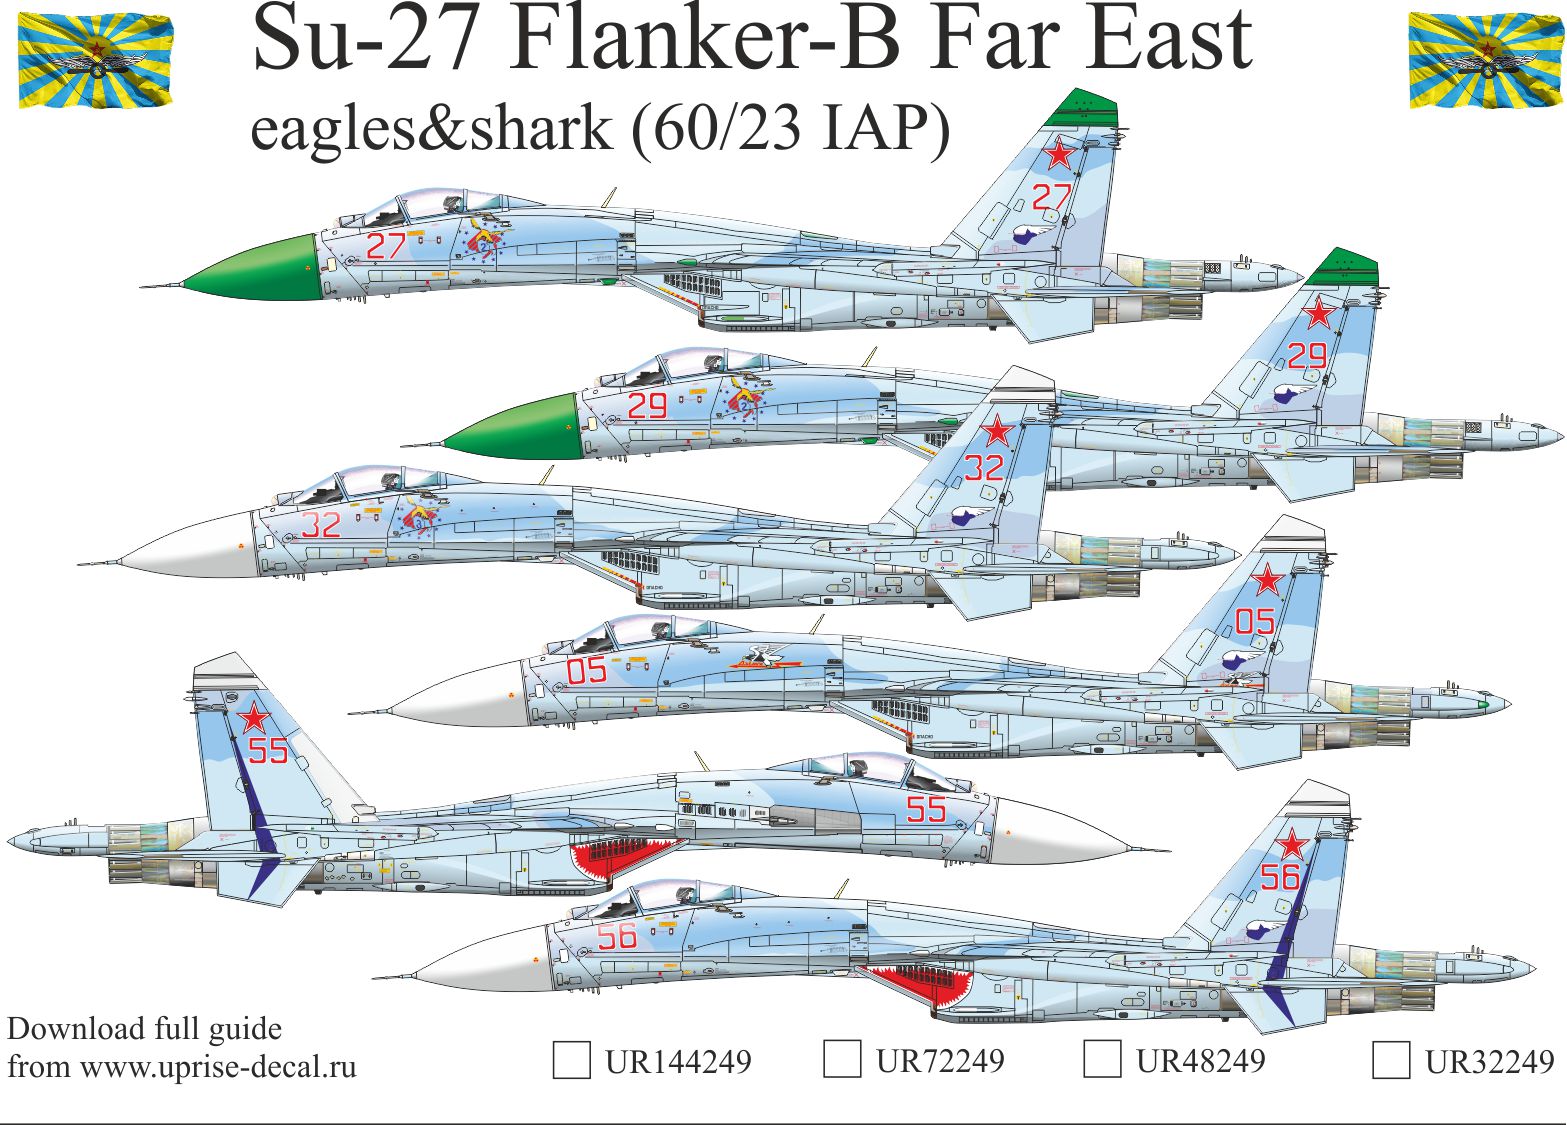 UR32249  декали  Su-27 Flanker-B Far East eagles & shark (60/23 IAP), without stencils  (1:32)